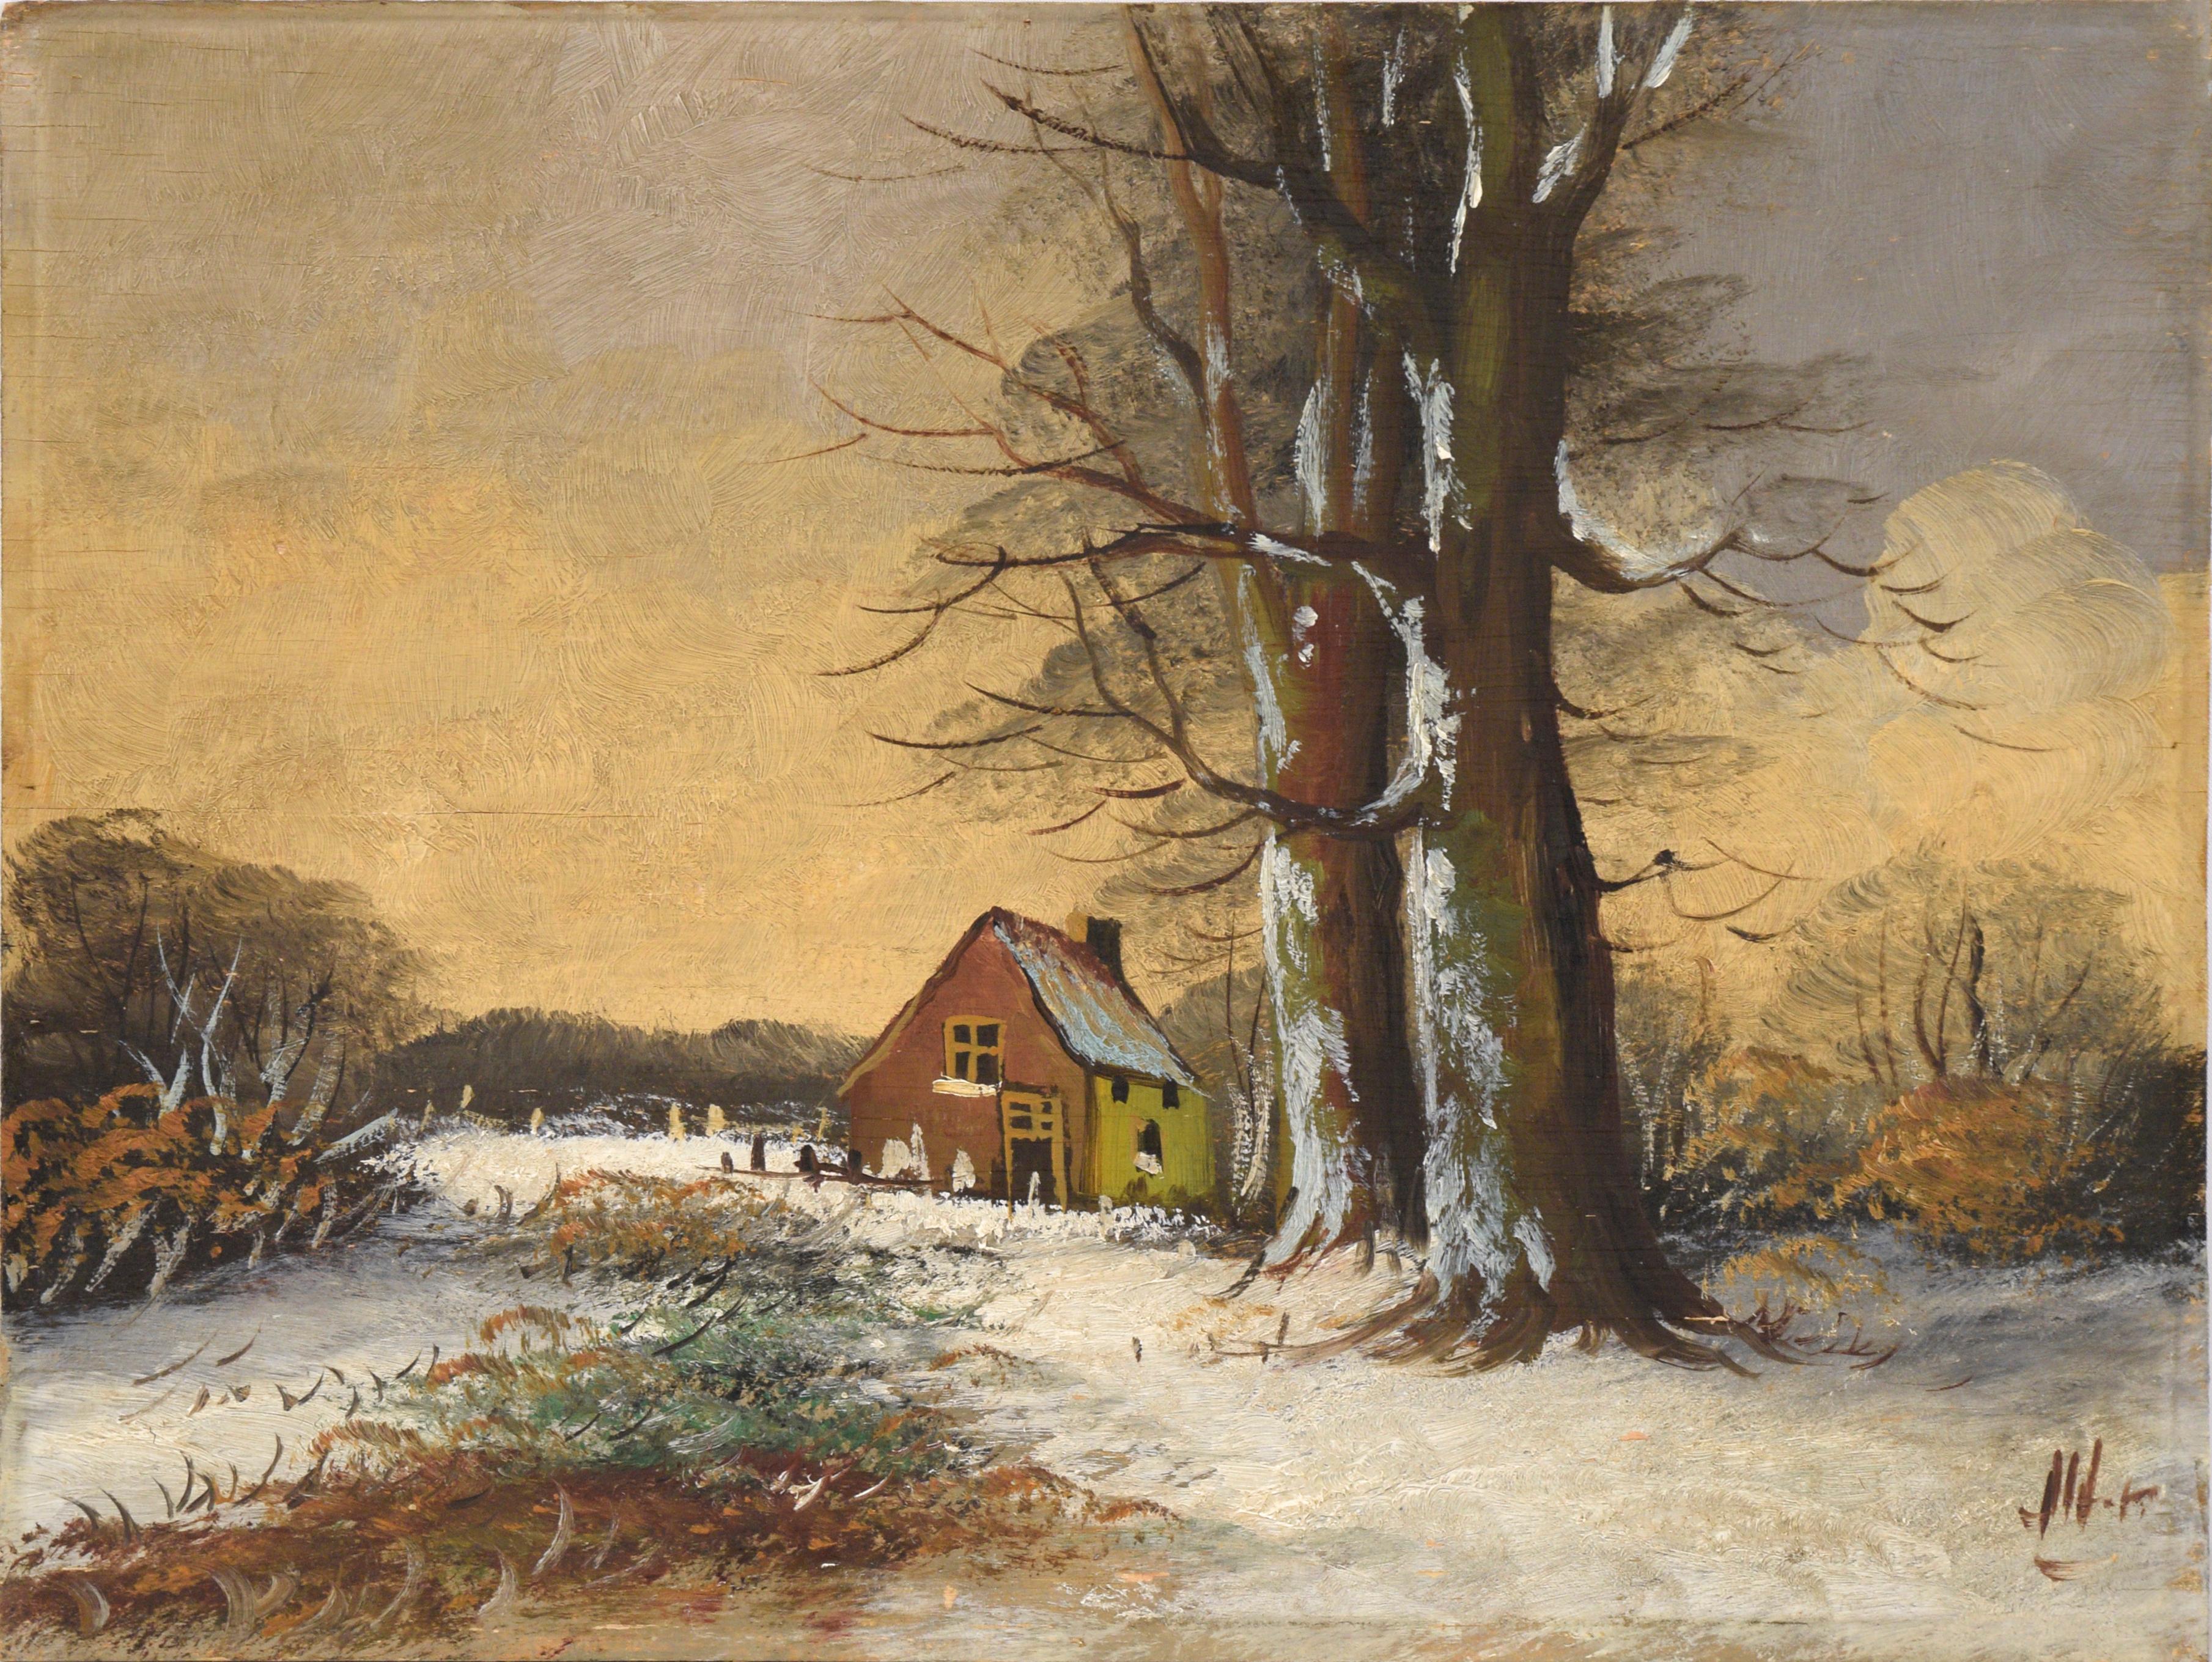 Unknown Landscape Painting - Winter on the Farm - Plein Air Landscape